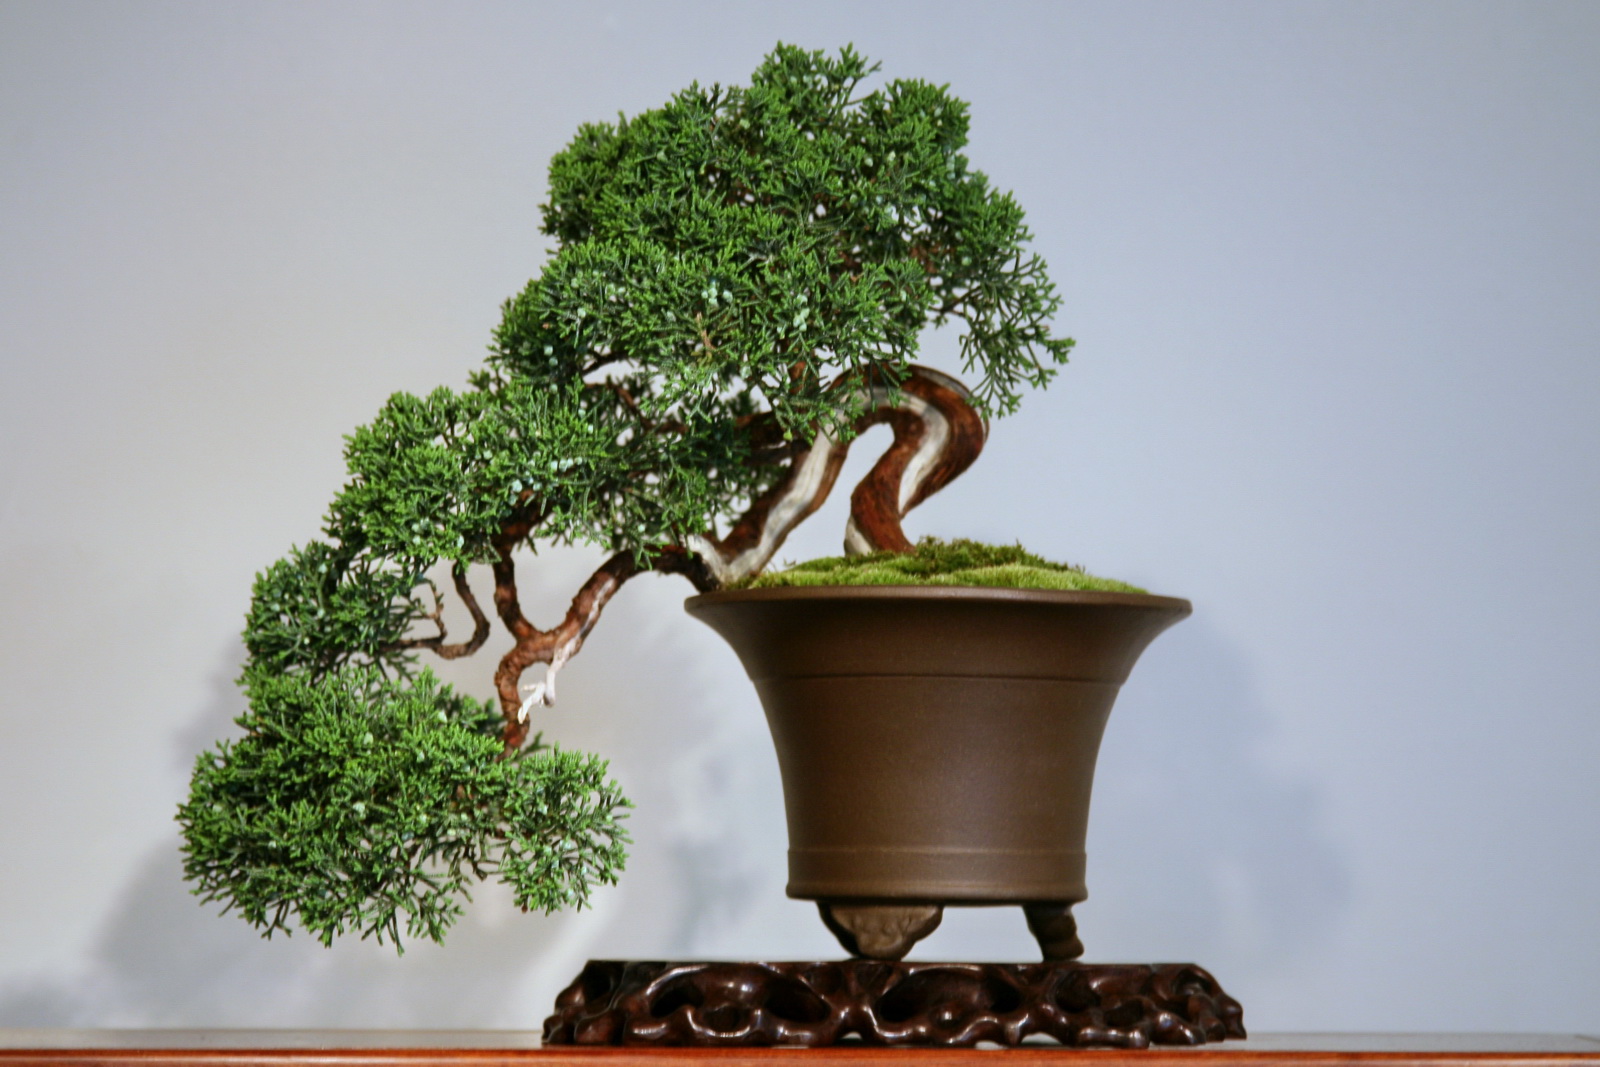 a bonsai tree is in a brown pot